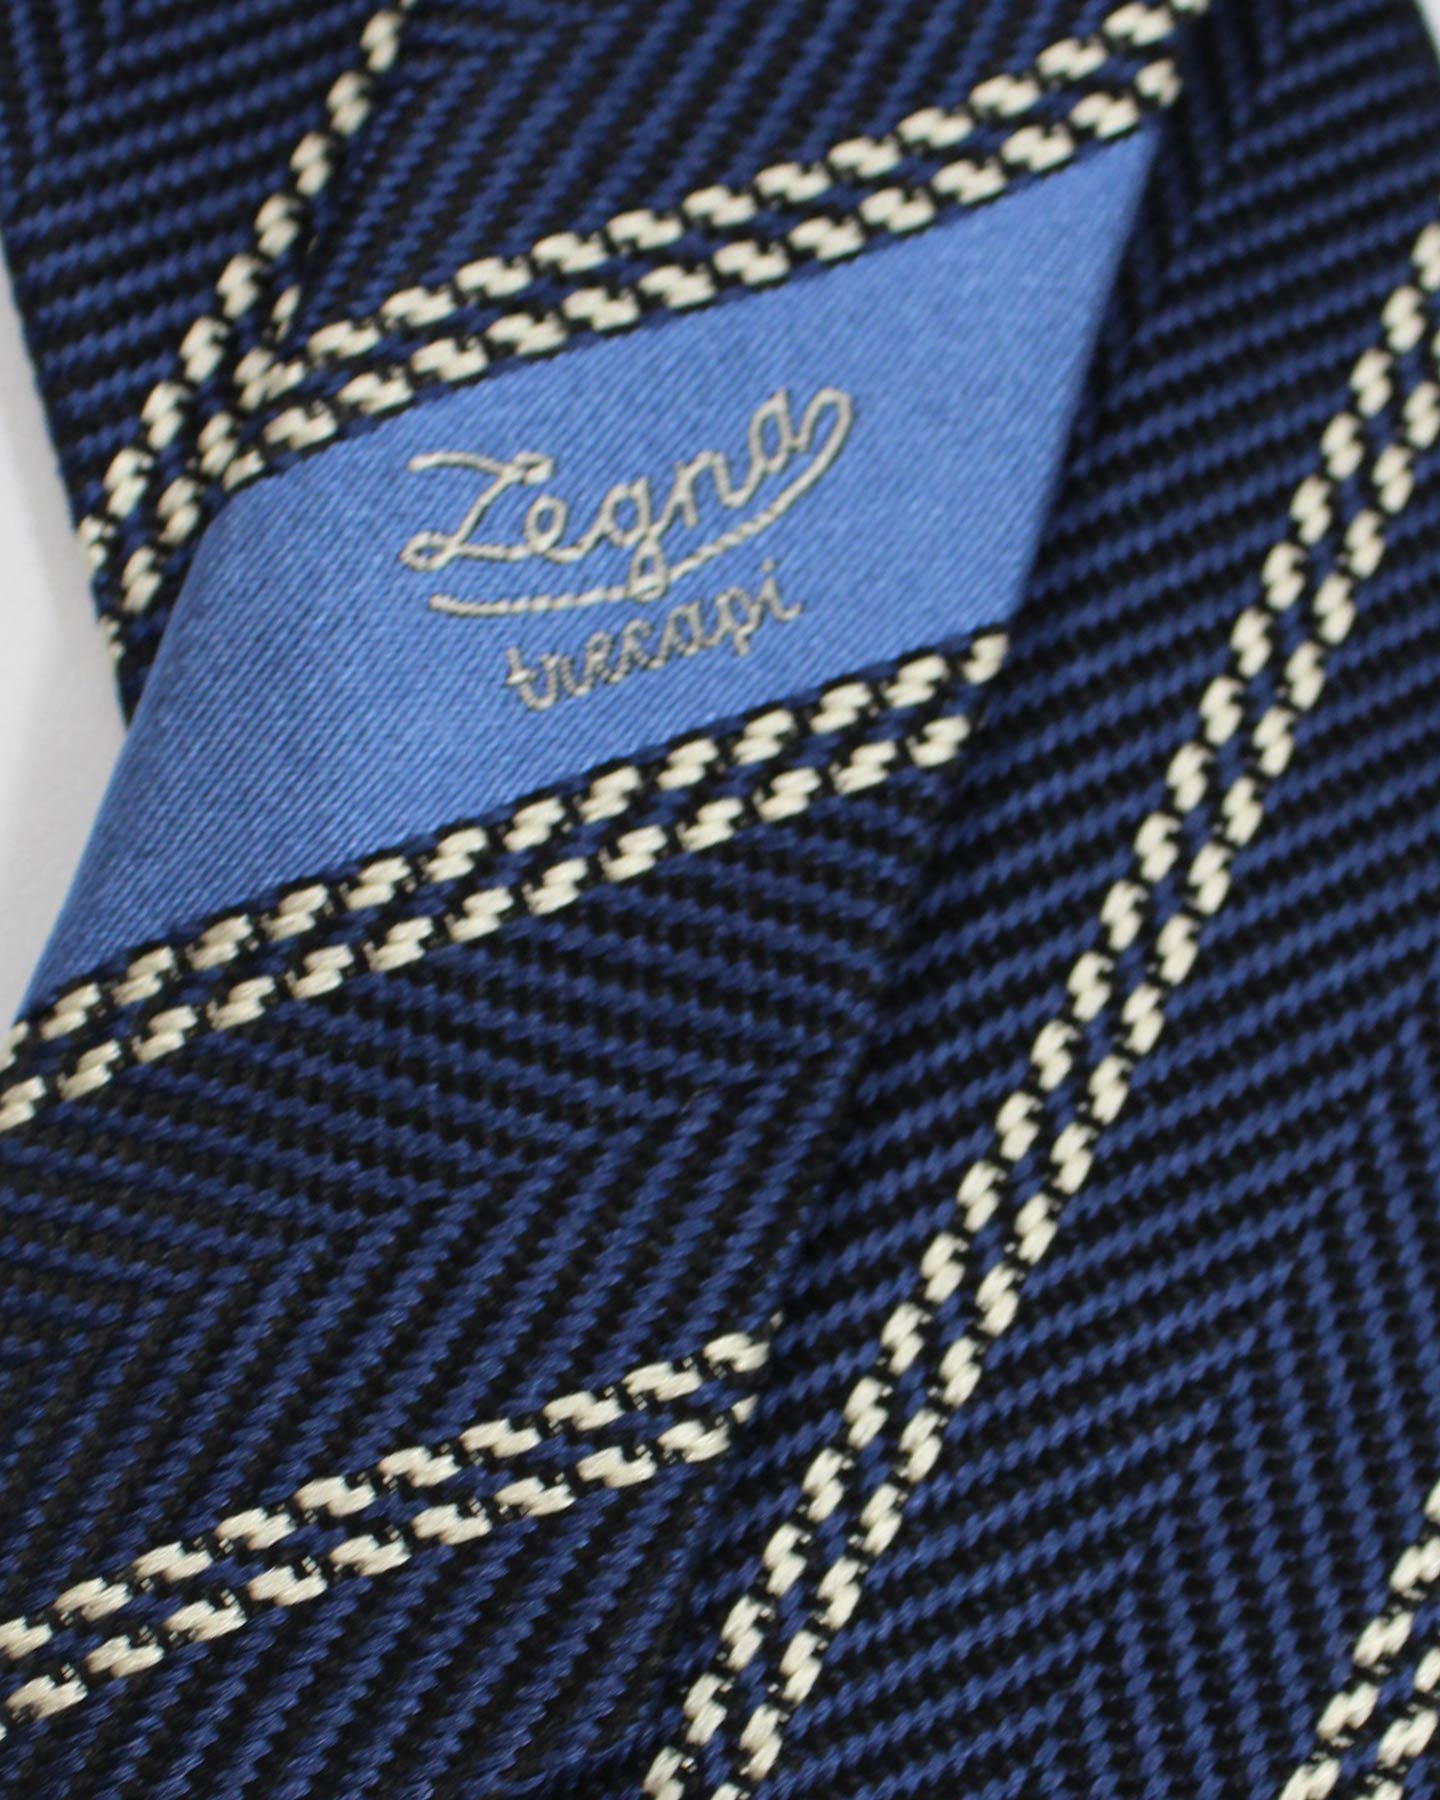 Ermenegildo Zegna Silk Tie Dark Blue Silver Stripes - Hand Made in Italy